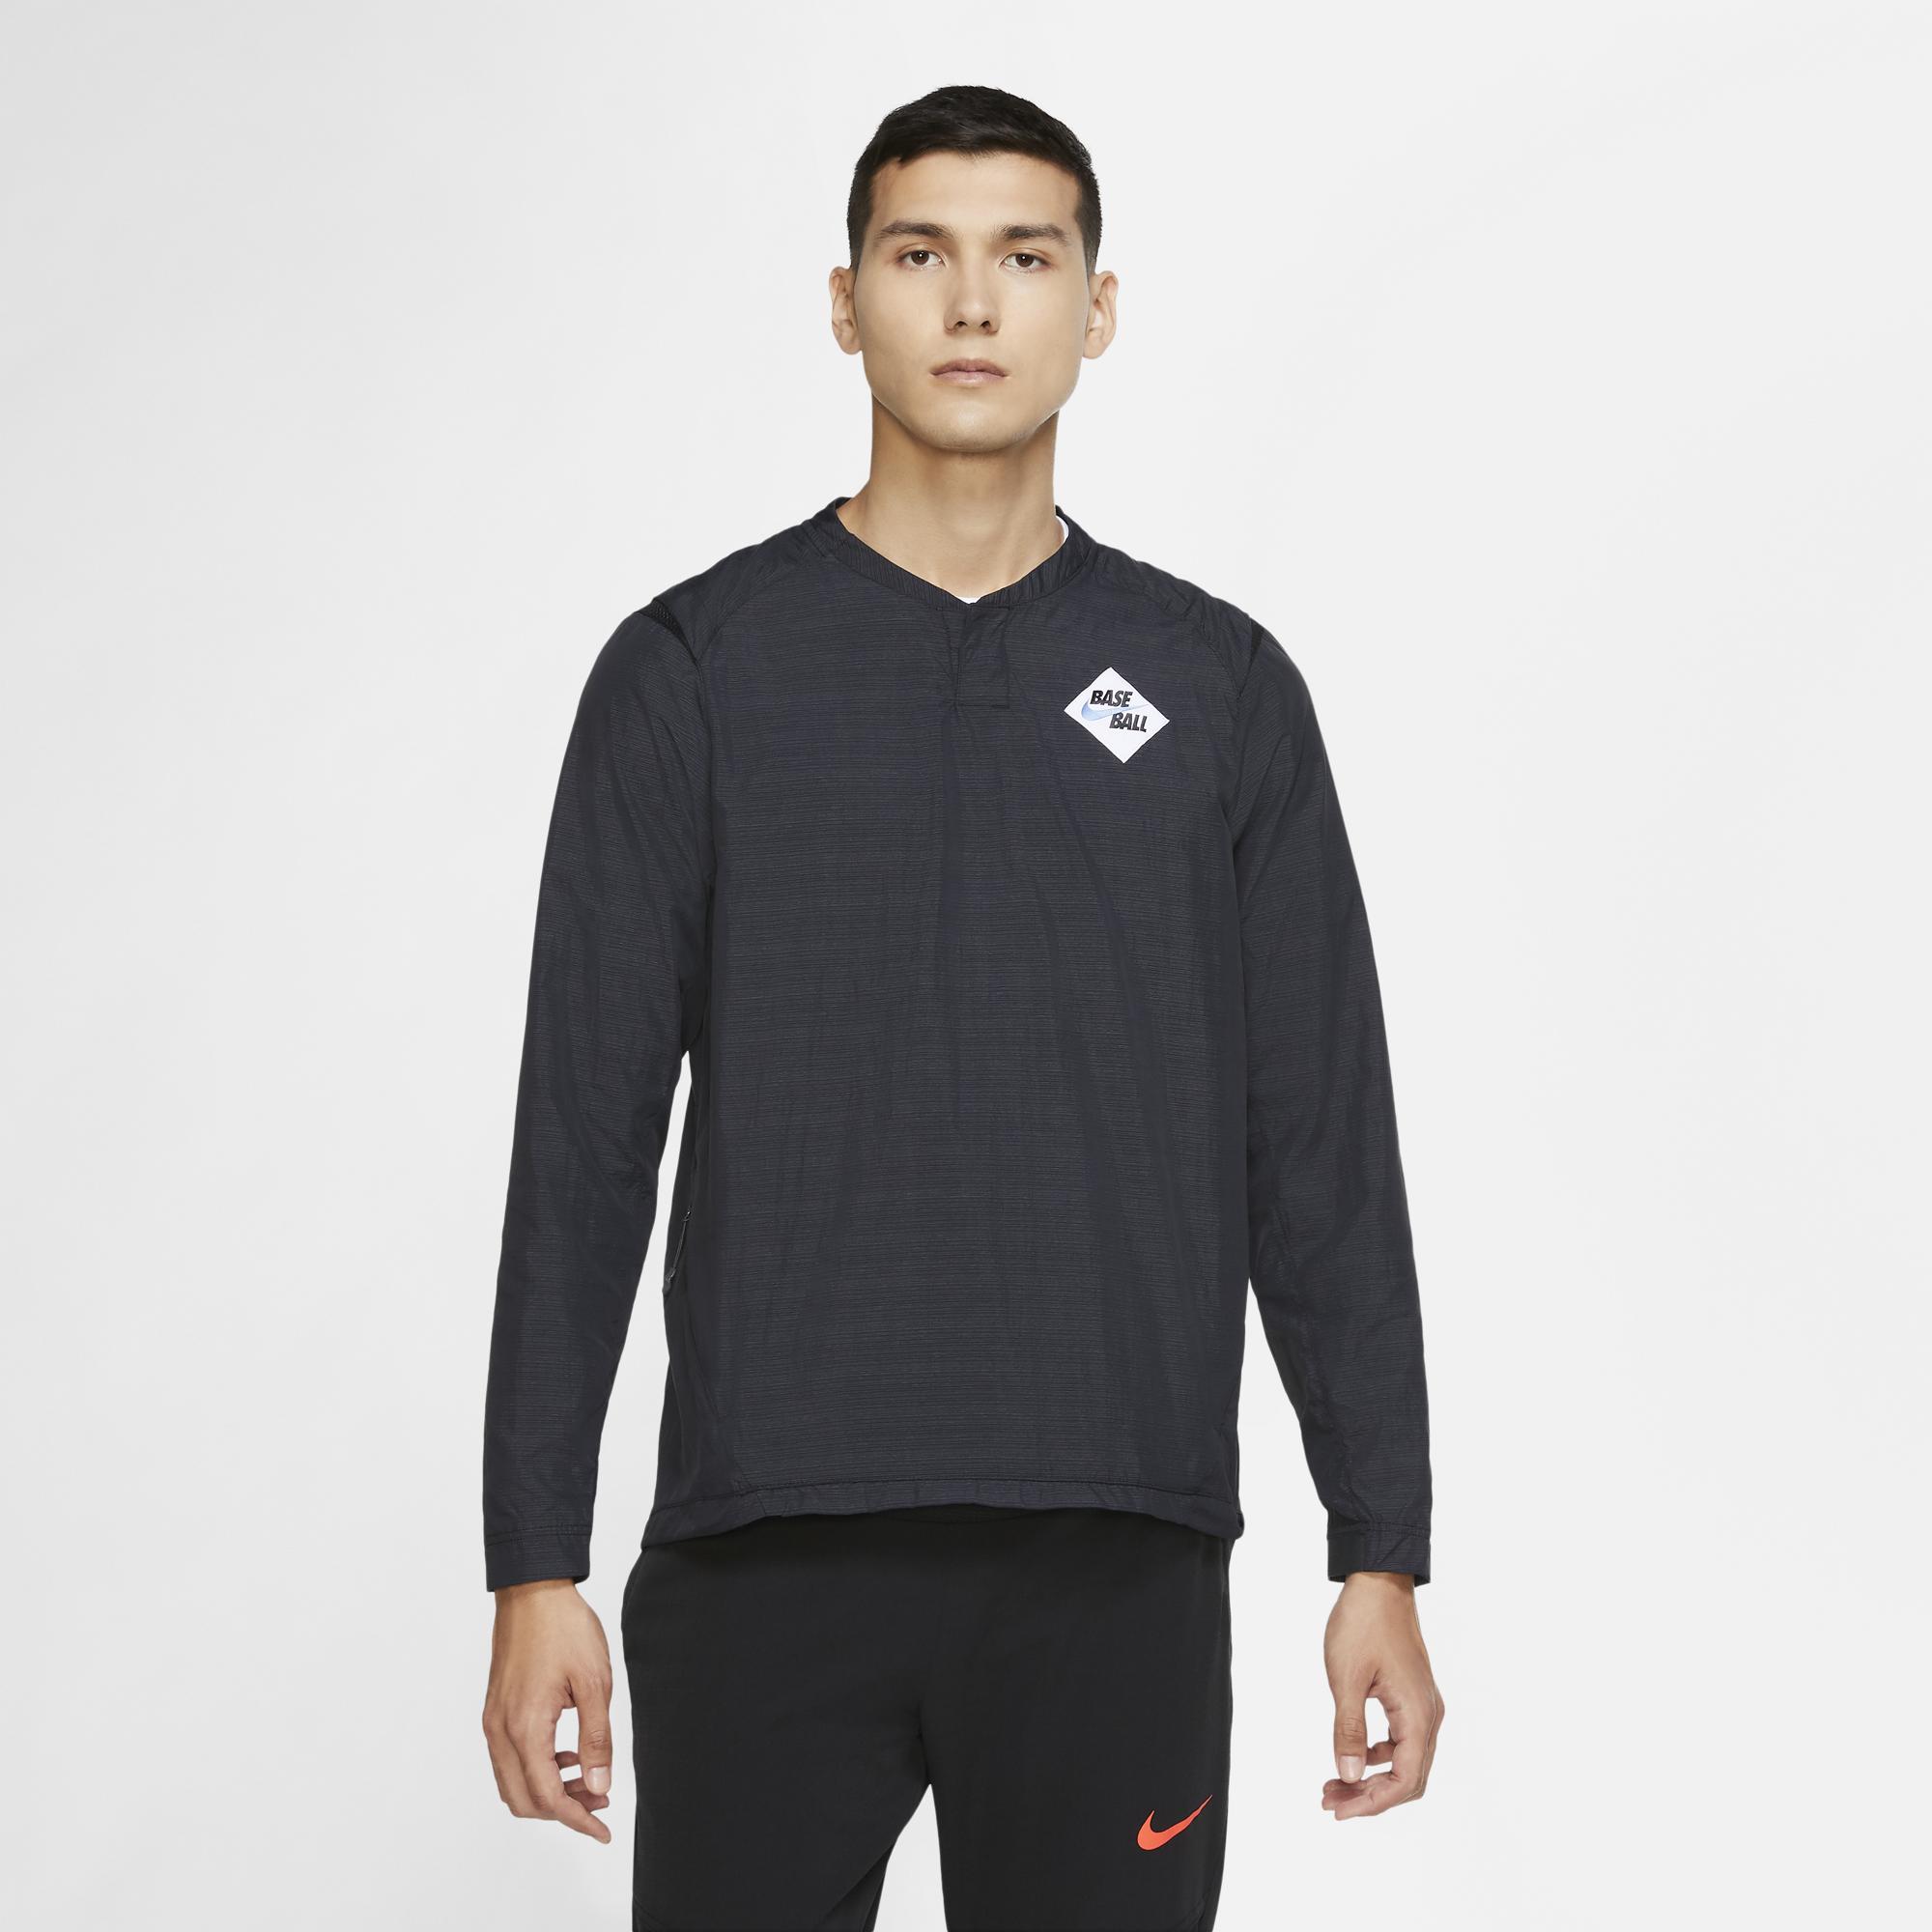 Nike Synthetic Long Sleeve Windshirt in Black/White (Black) for Men - Lyst